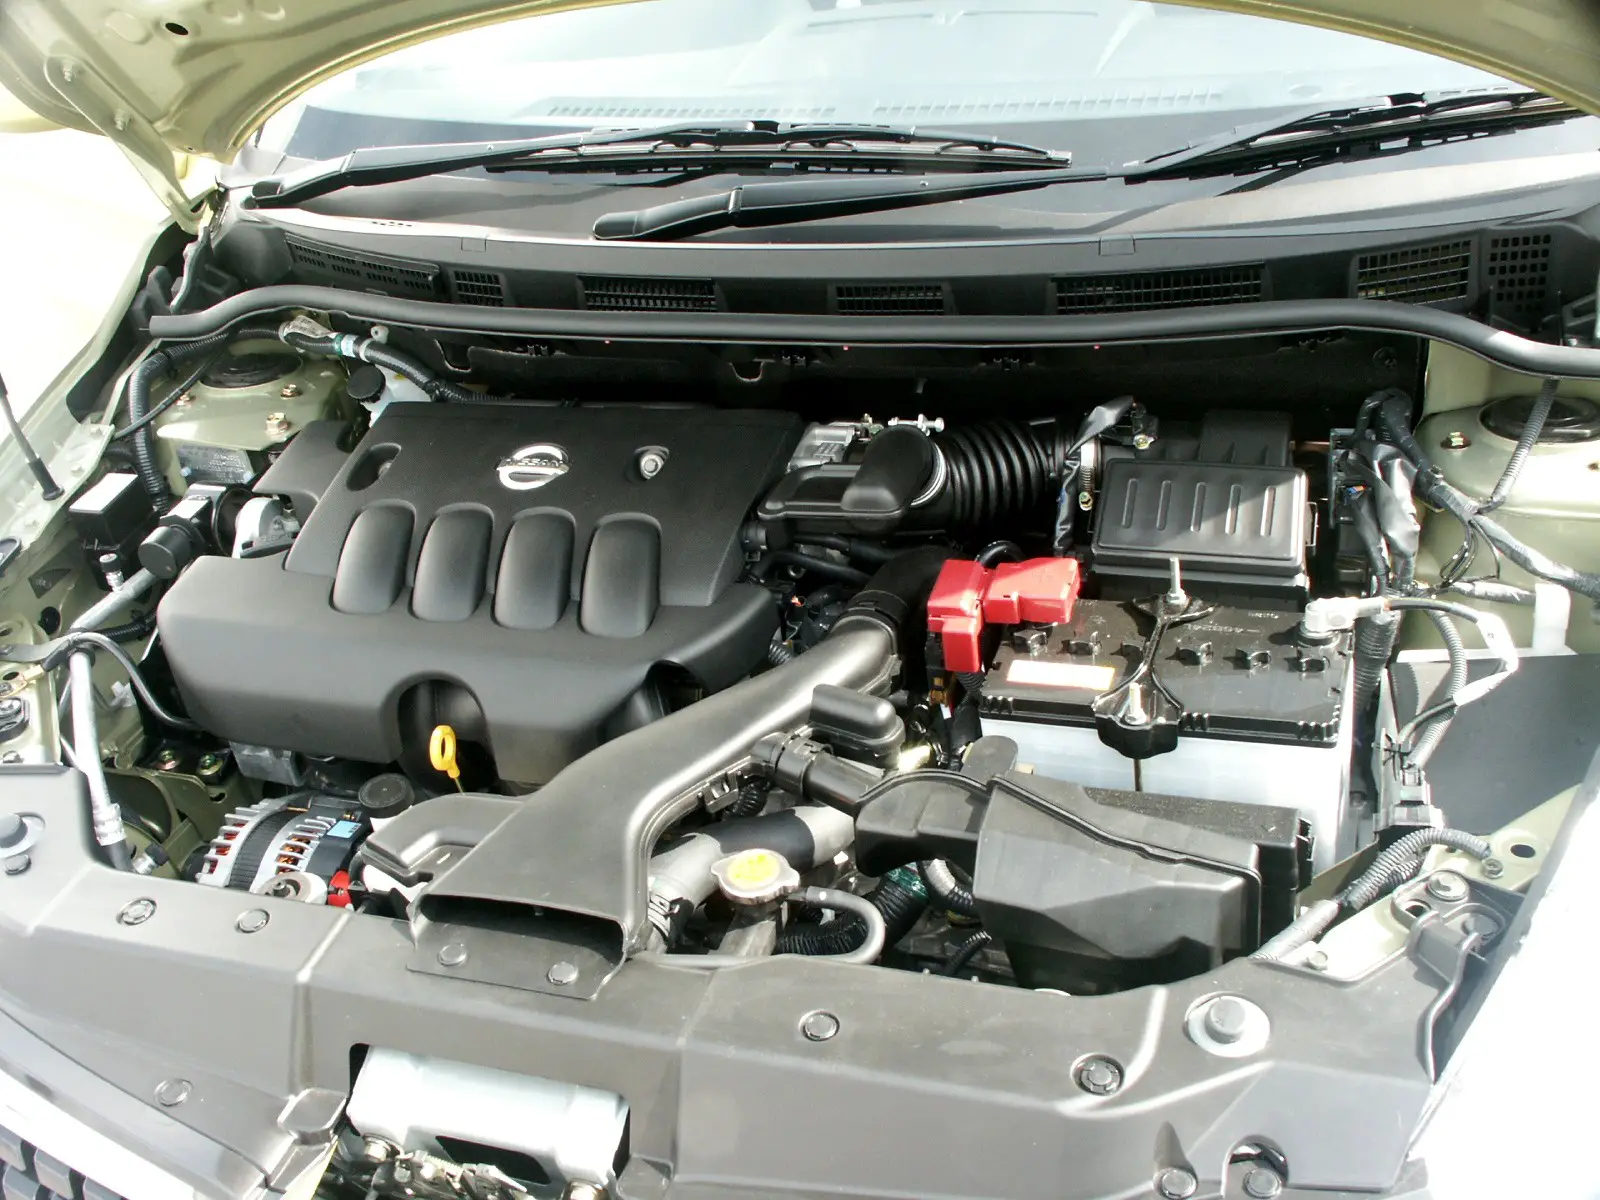 Nissan versa engine noise problems #6